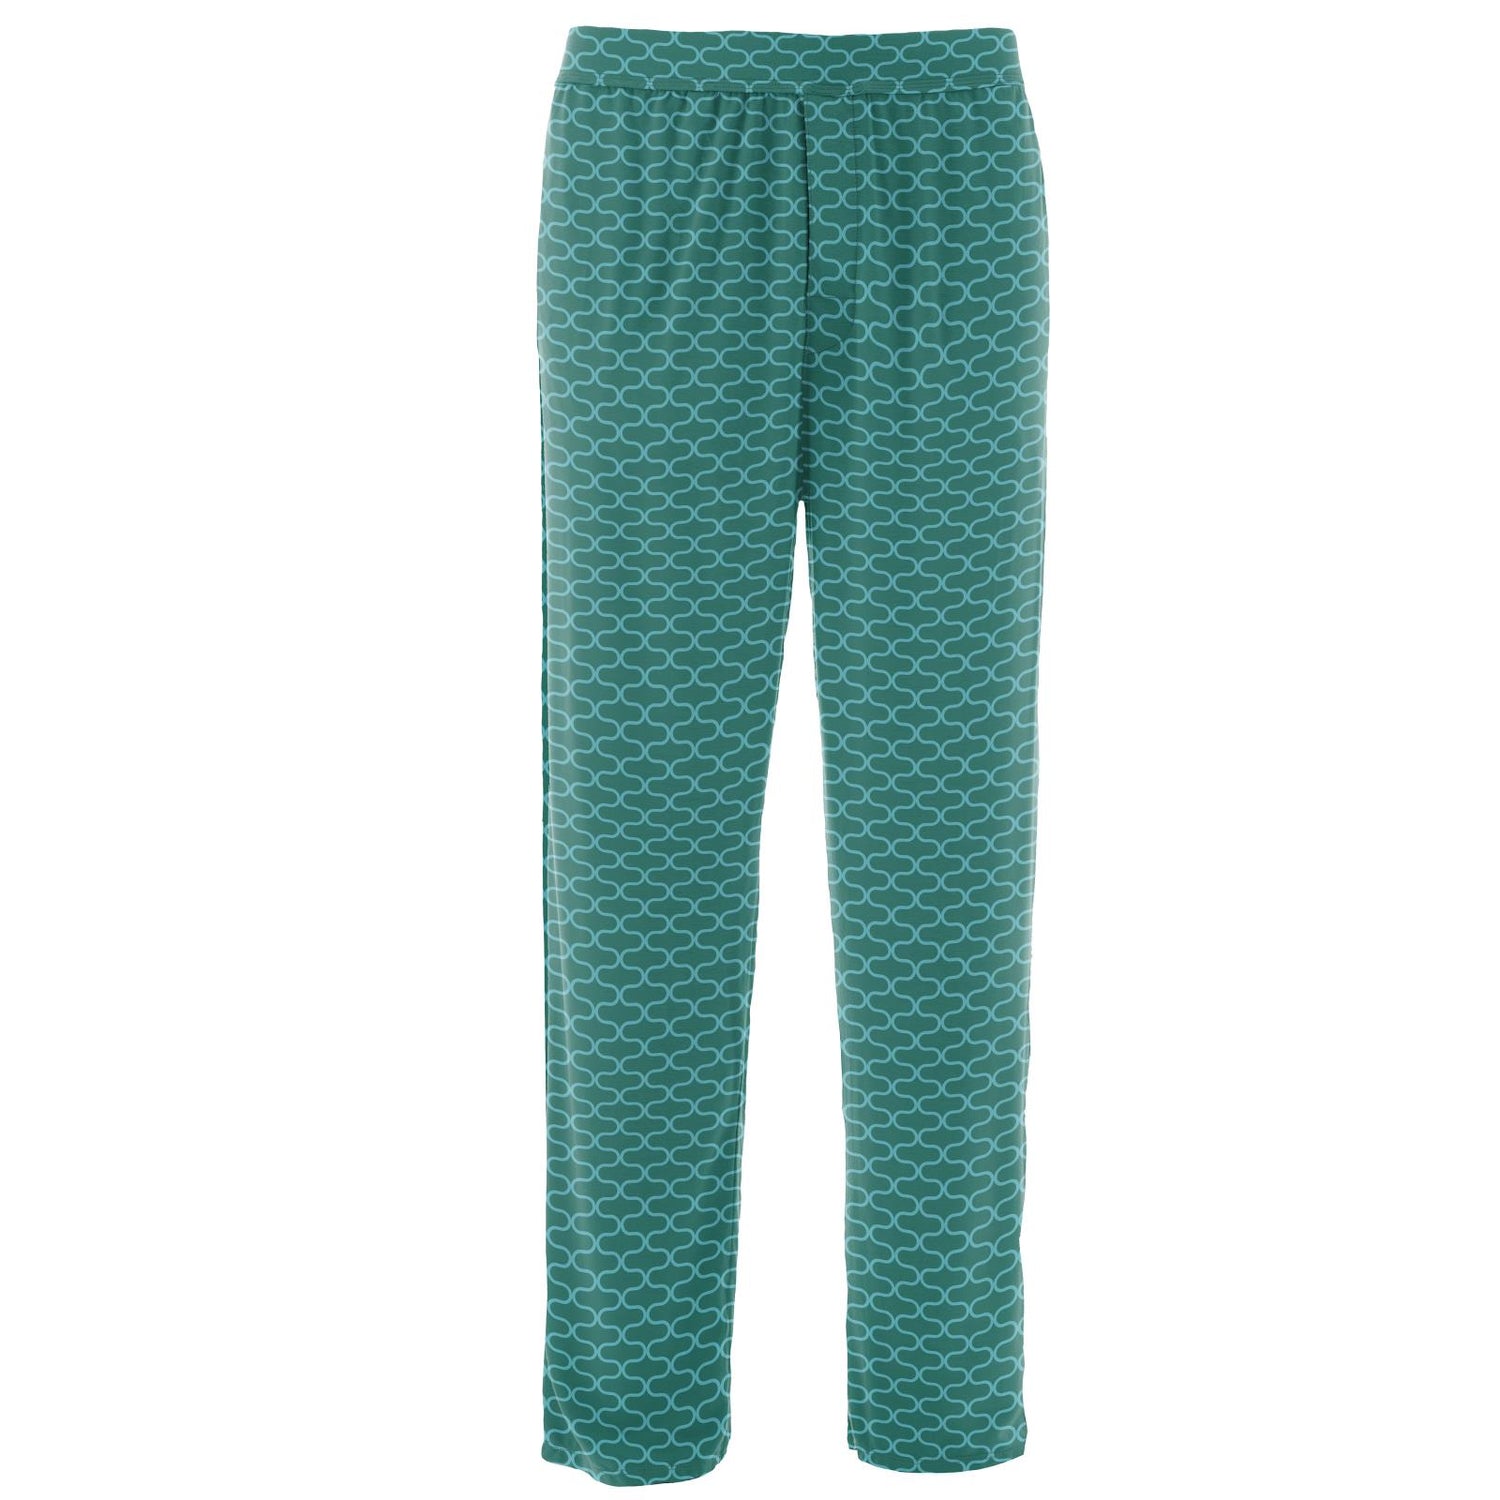 Men's Print Pajama Pants in Ivy Lattice